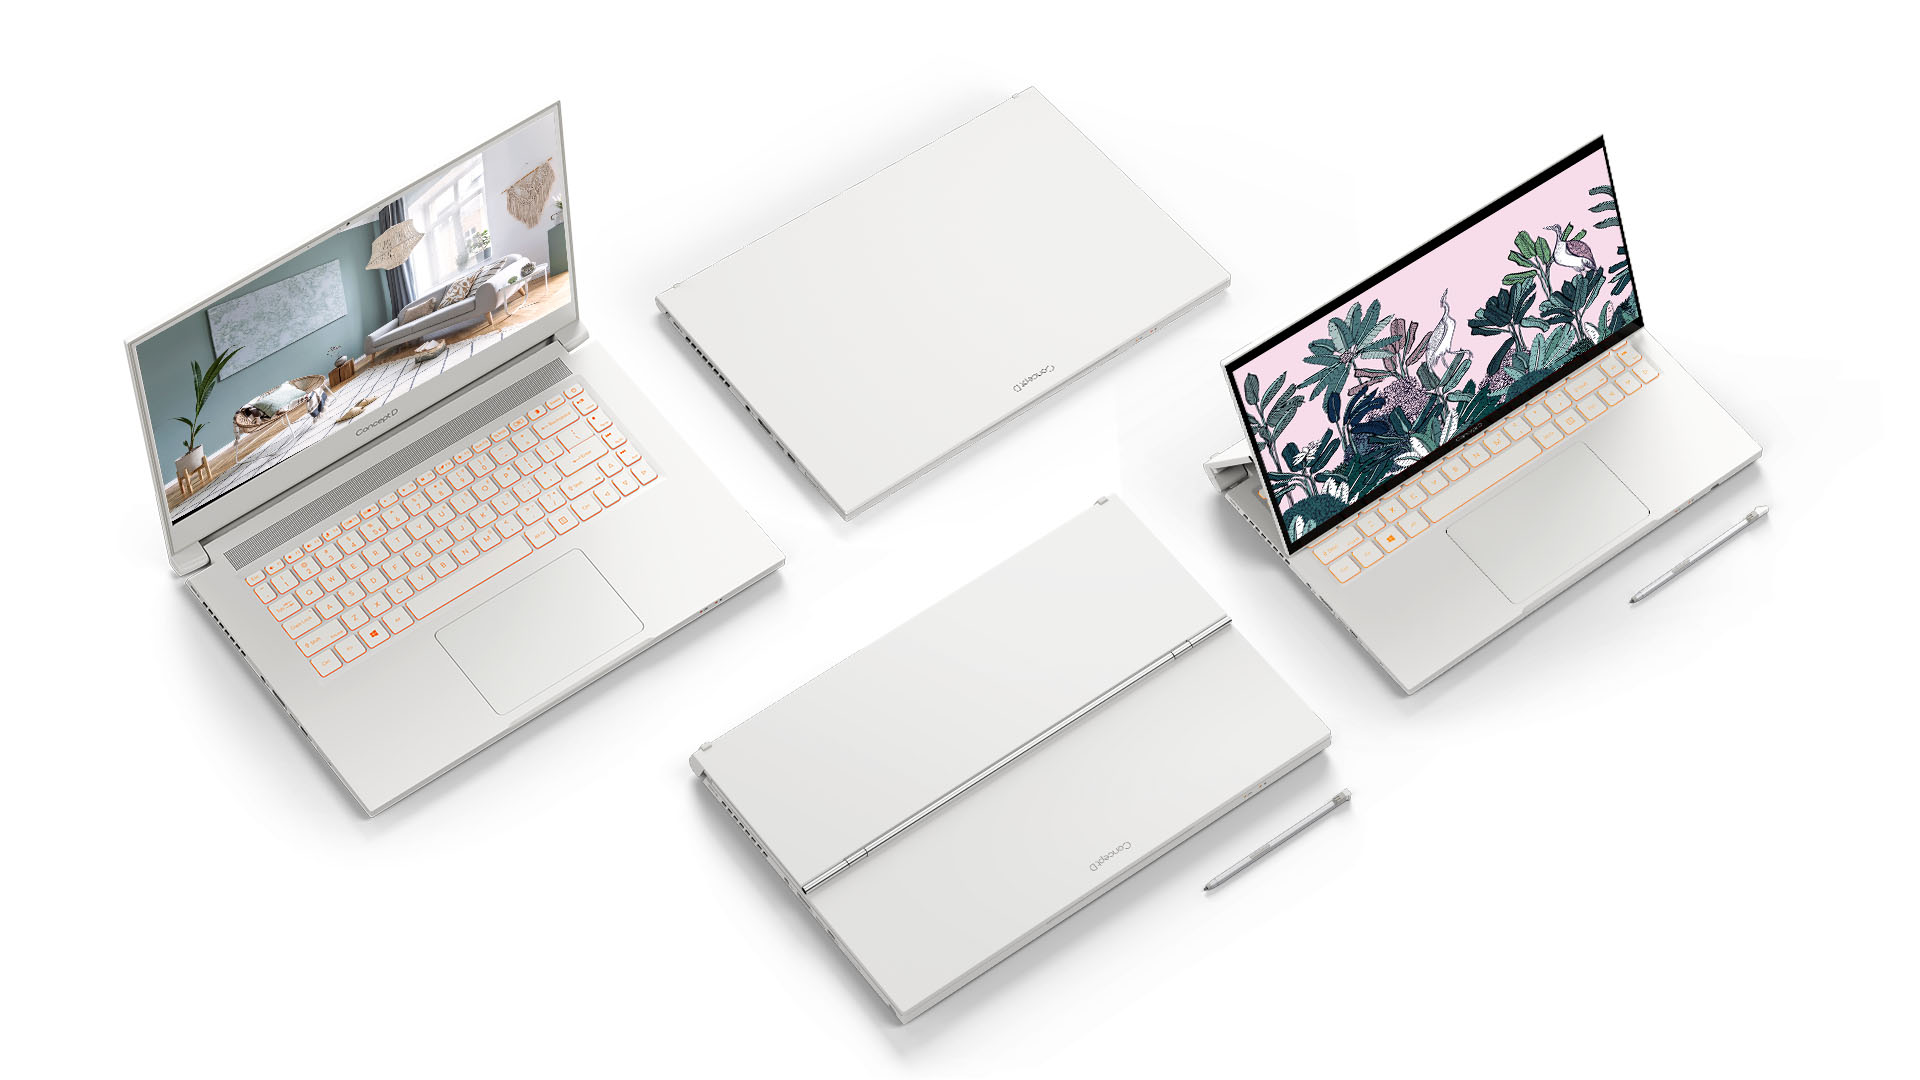 ConceptD 3/3 Ezel Creator Laptops